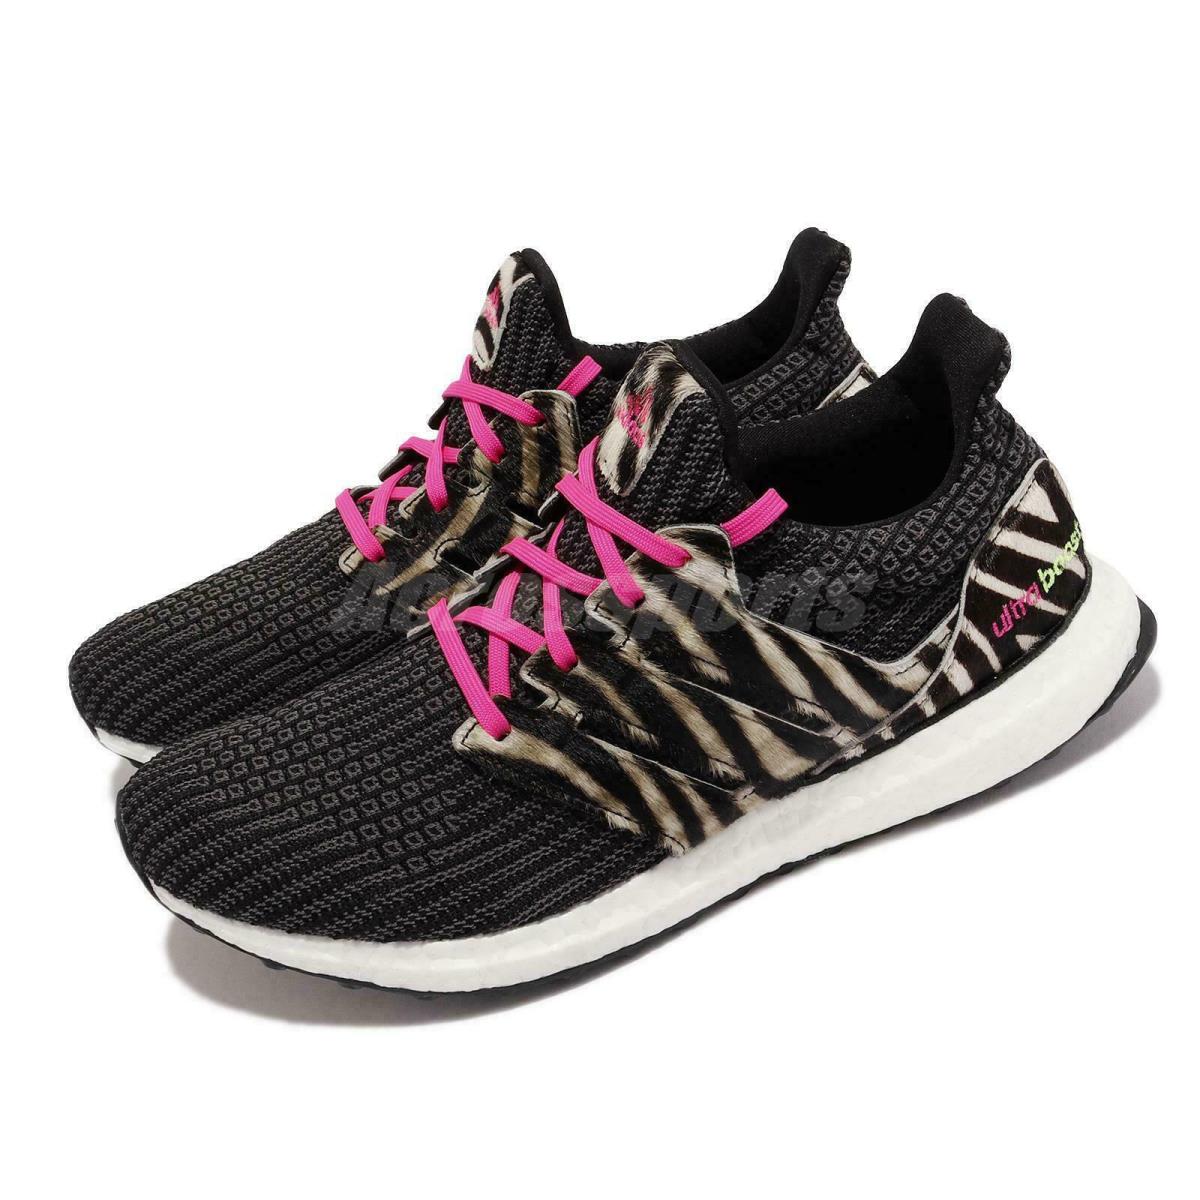 Adidas Ultraboost Dna Men`s Running Shoes Black White Pink FZ2730